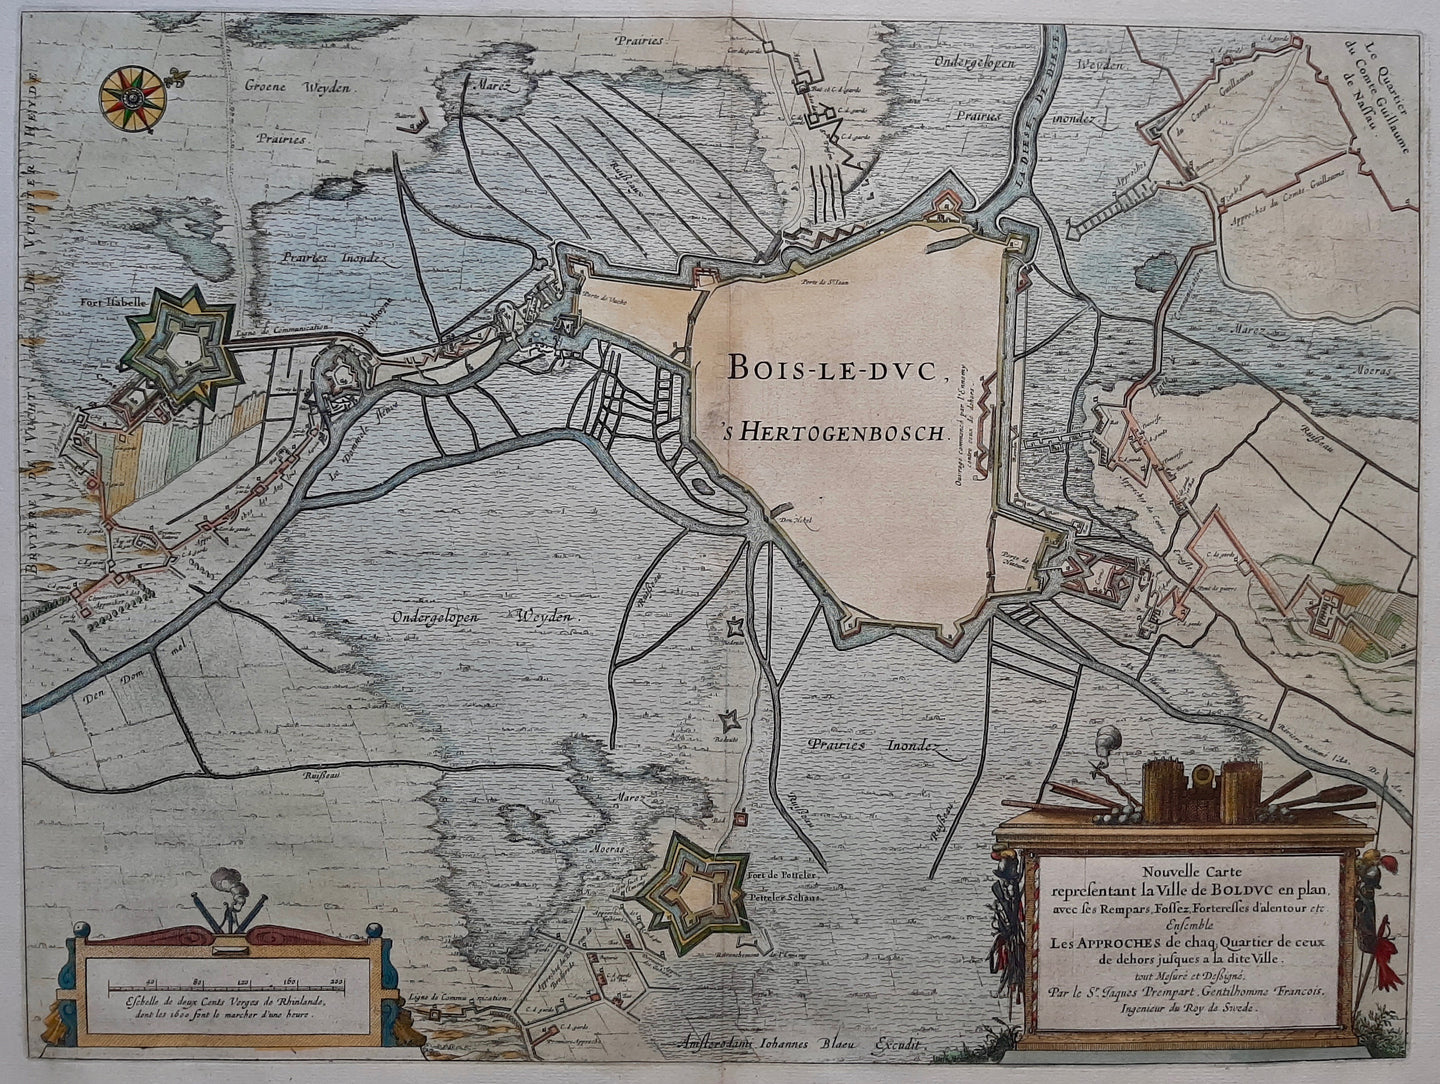 Den Bosch Nouvelle Carte representant la Ville de Bolduc en plan, () 's-Hertogenbosch - J Blaeu - 1649